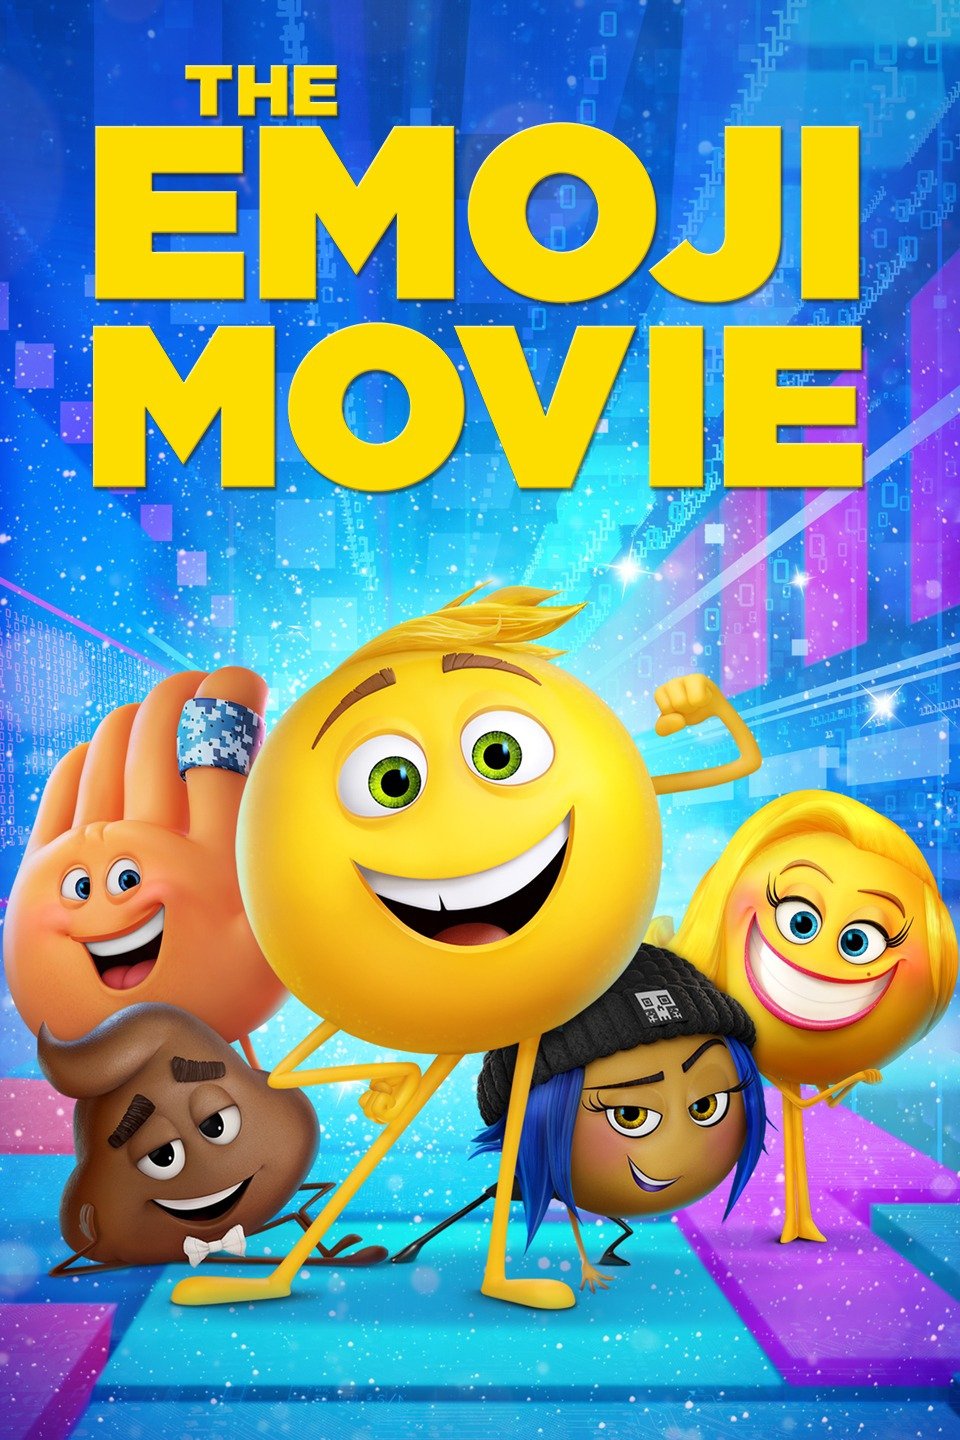 [MINI Super-HQ] The Emoji Movie (2017) อิโมจิ แอ๊พติสต์ตะลุยโลก [1080p] [พากย์ไทย 5.1 + อังกฤษ DTS] [BrRip.DTS.x264] [ซับไทย + อังกฤษ] [พากษ์ไทย + บรรยายไทย] [ONE2UP]